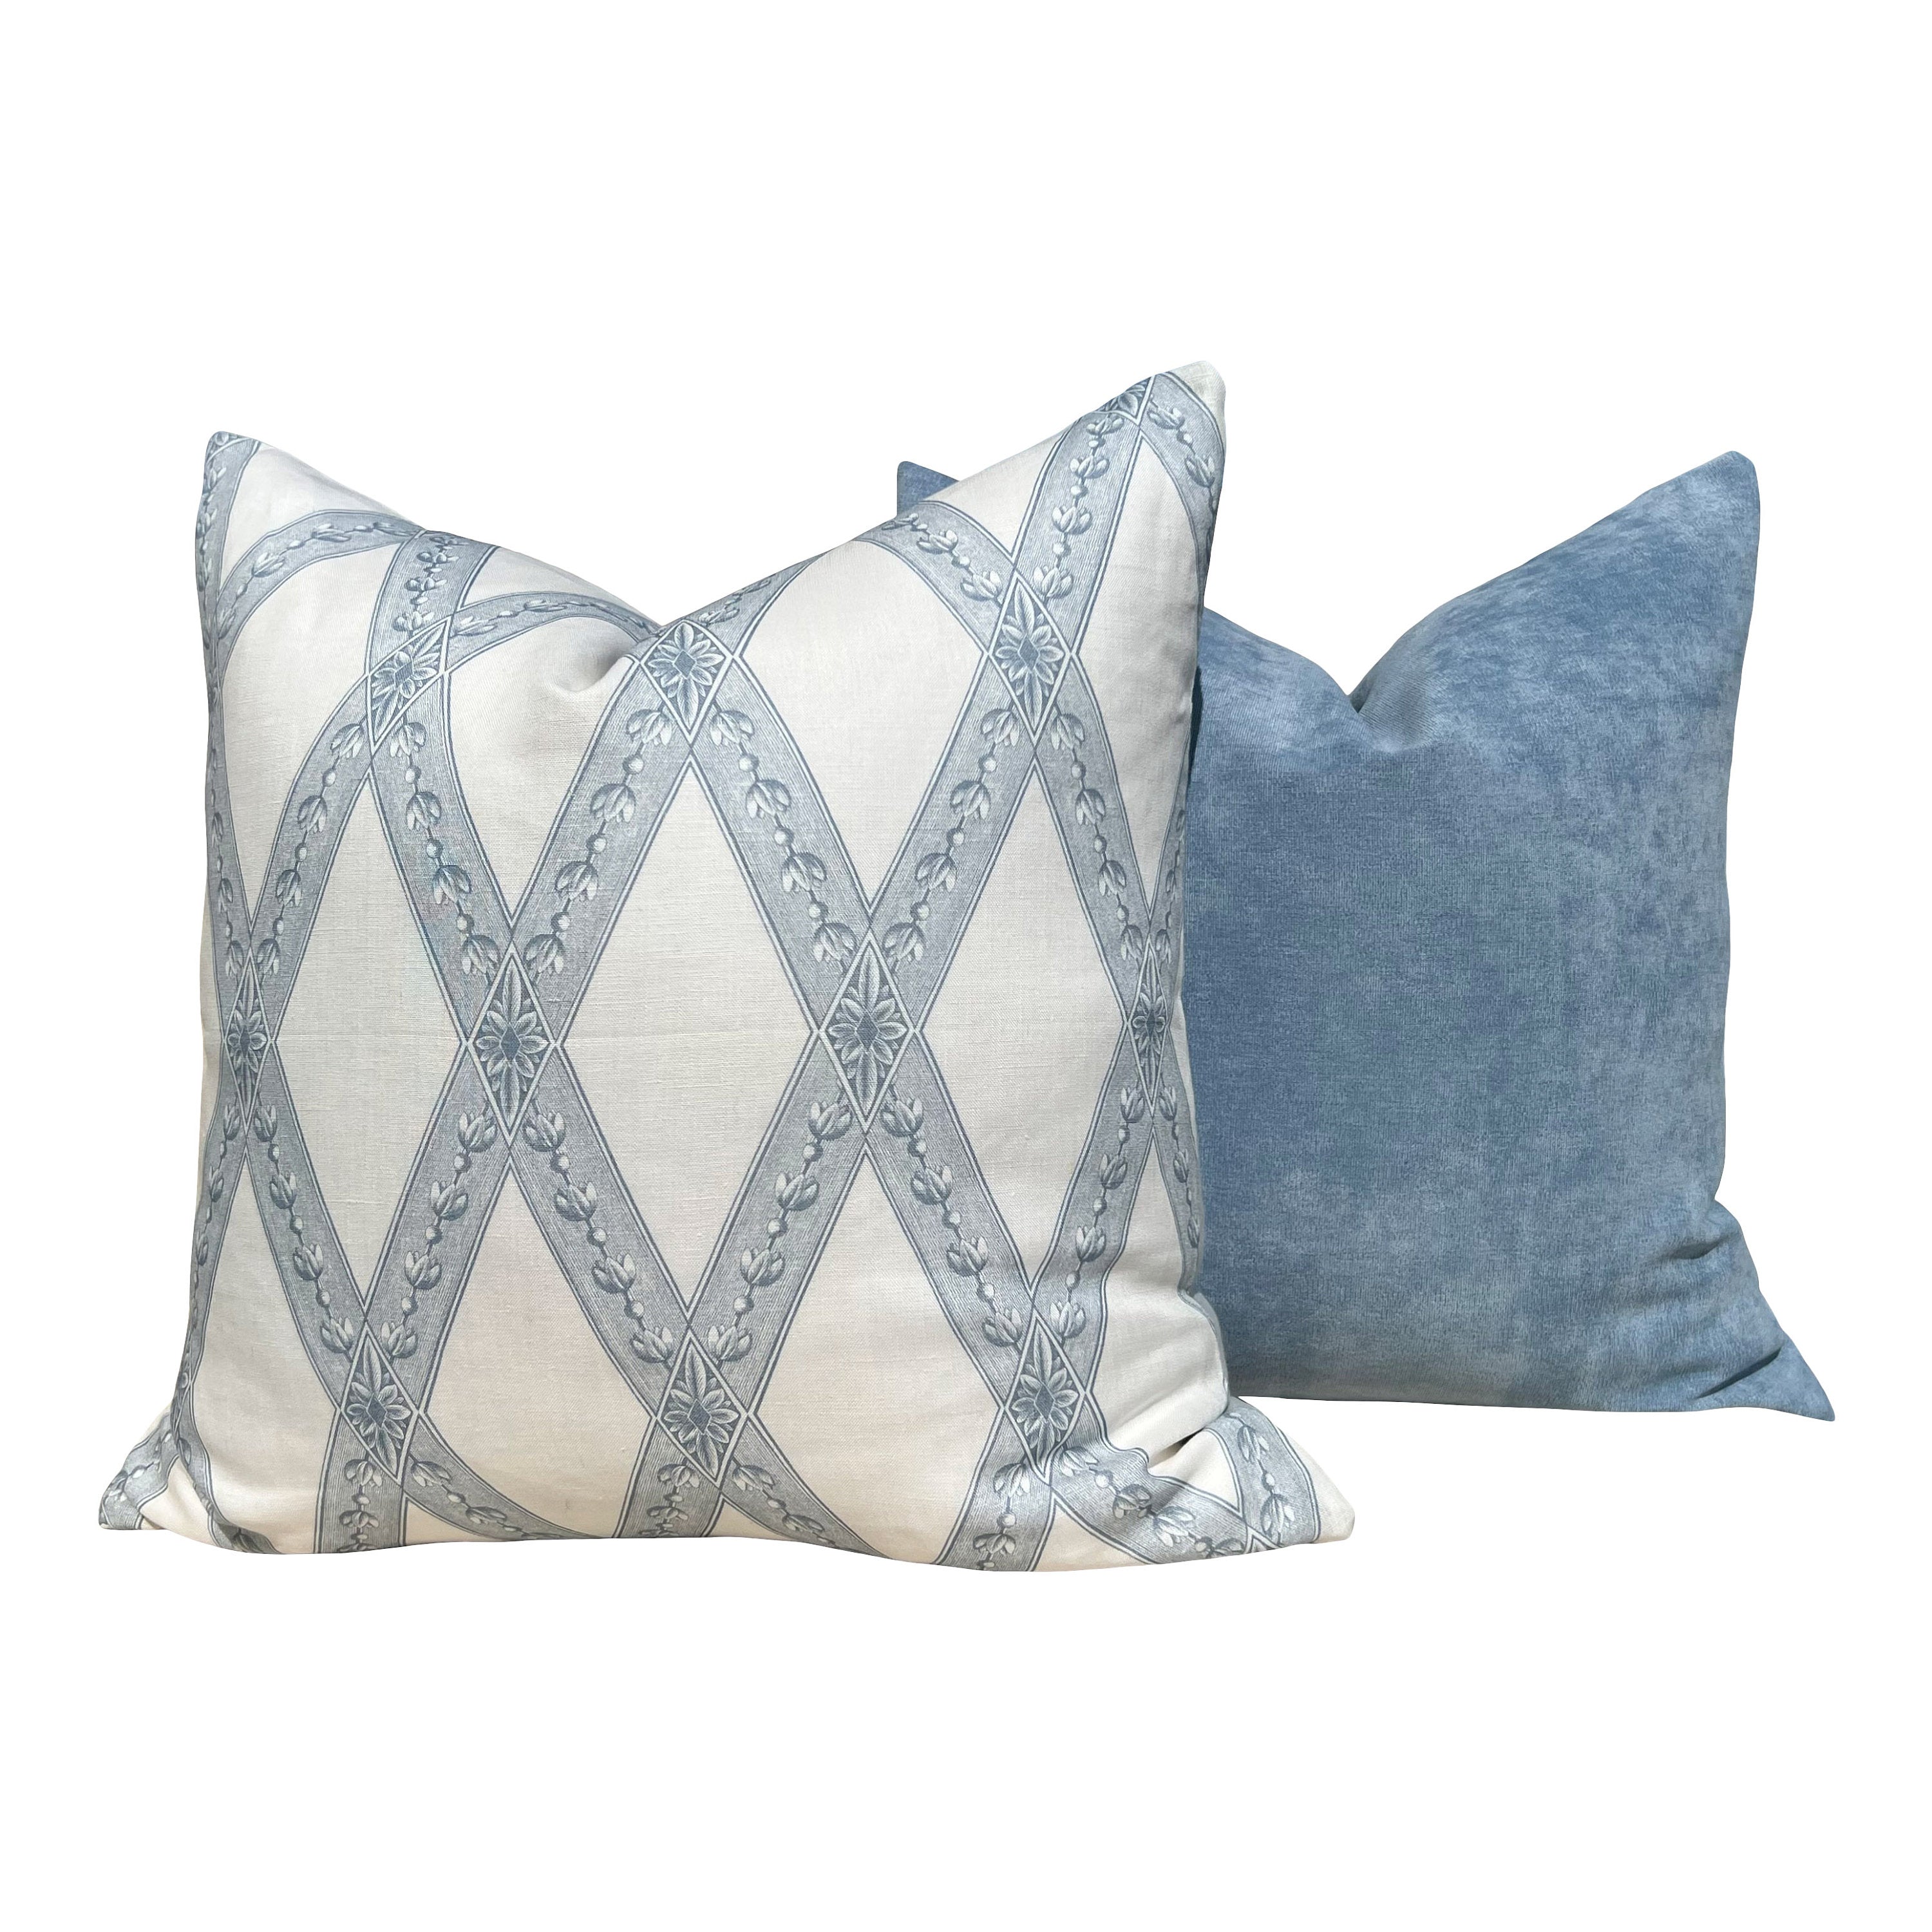 Schumacher Les Losanges Toile in Sky Blue. Designer Pillows, High End Pillow Covers, Trellis Throw Pillows, Euro Sham Cover, Lumbar Pillows